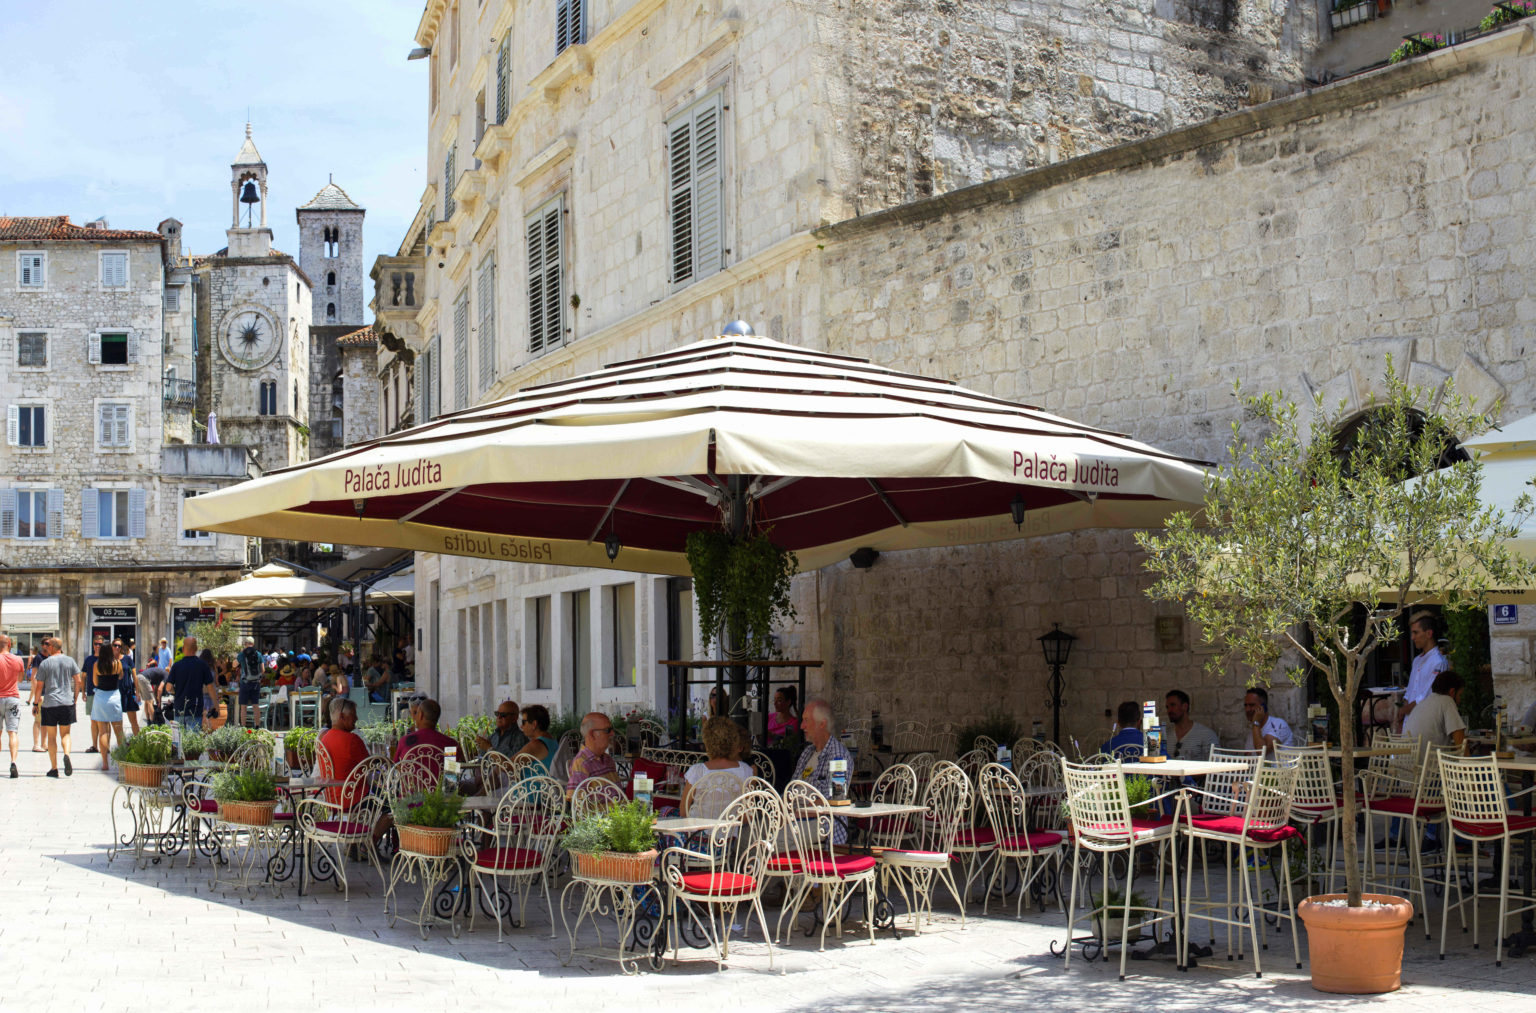 Judita Palace Heritage Hotel, Split - VisitCroatia.com - Tasteful ...